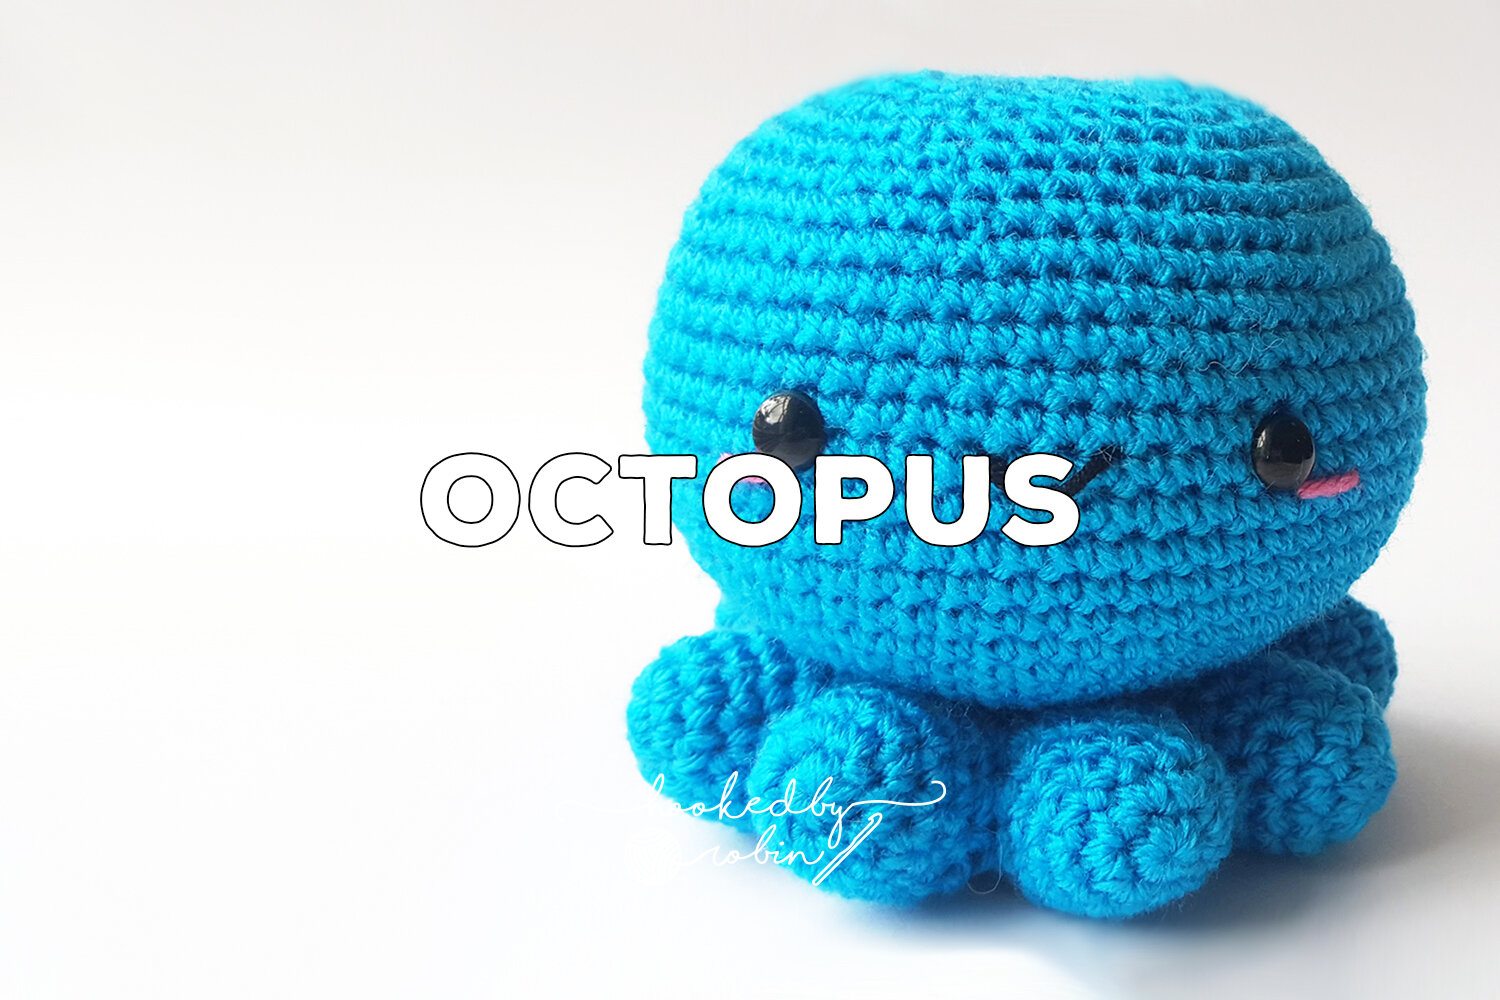 CROCHET PATTERN: Baby Octopus, Stuffed Amigurumi Plush Toy